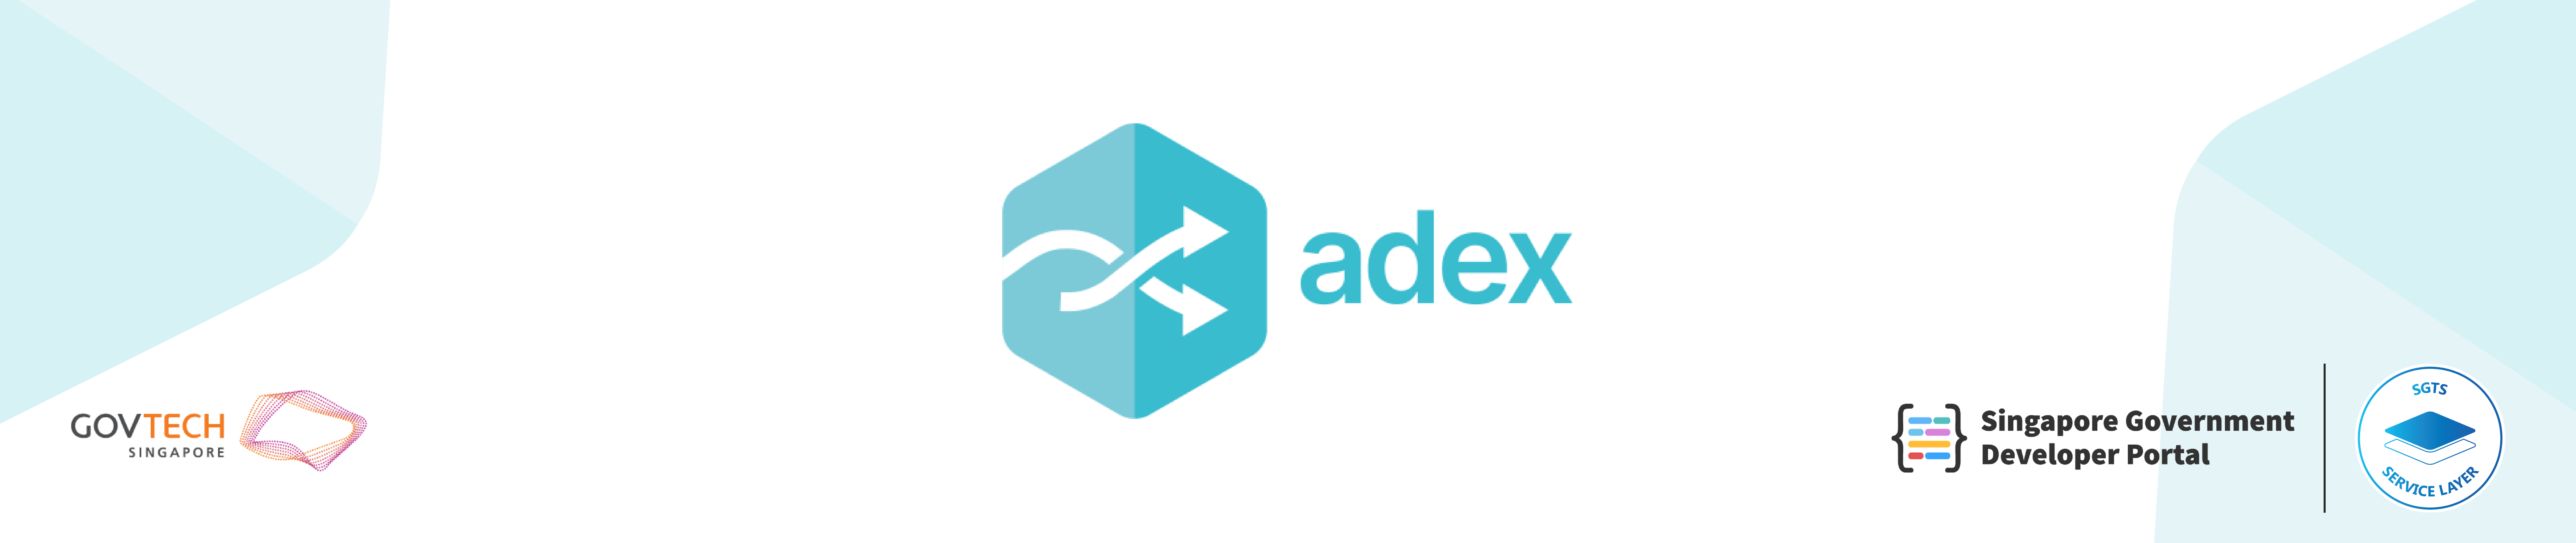 ADEX header banner for Singapore Government Developer Portal